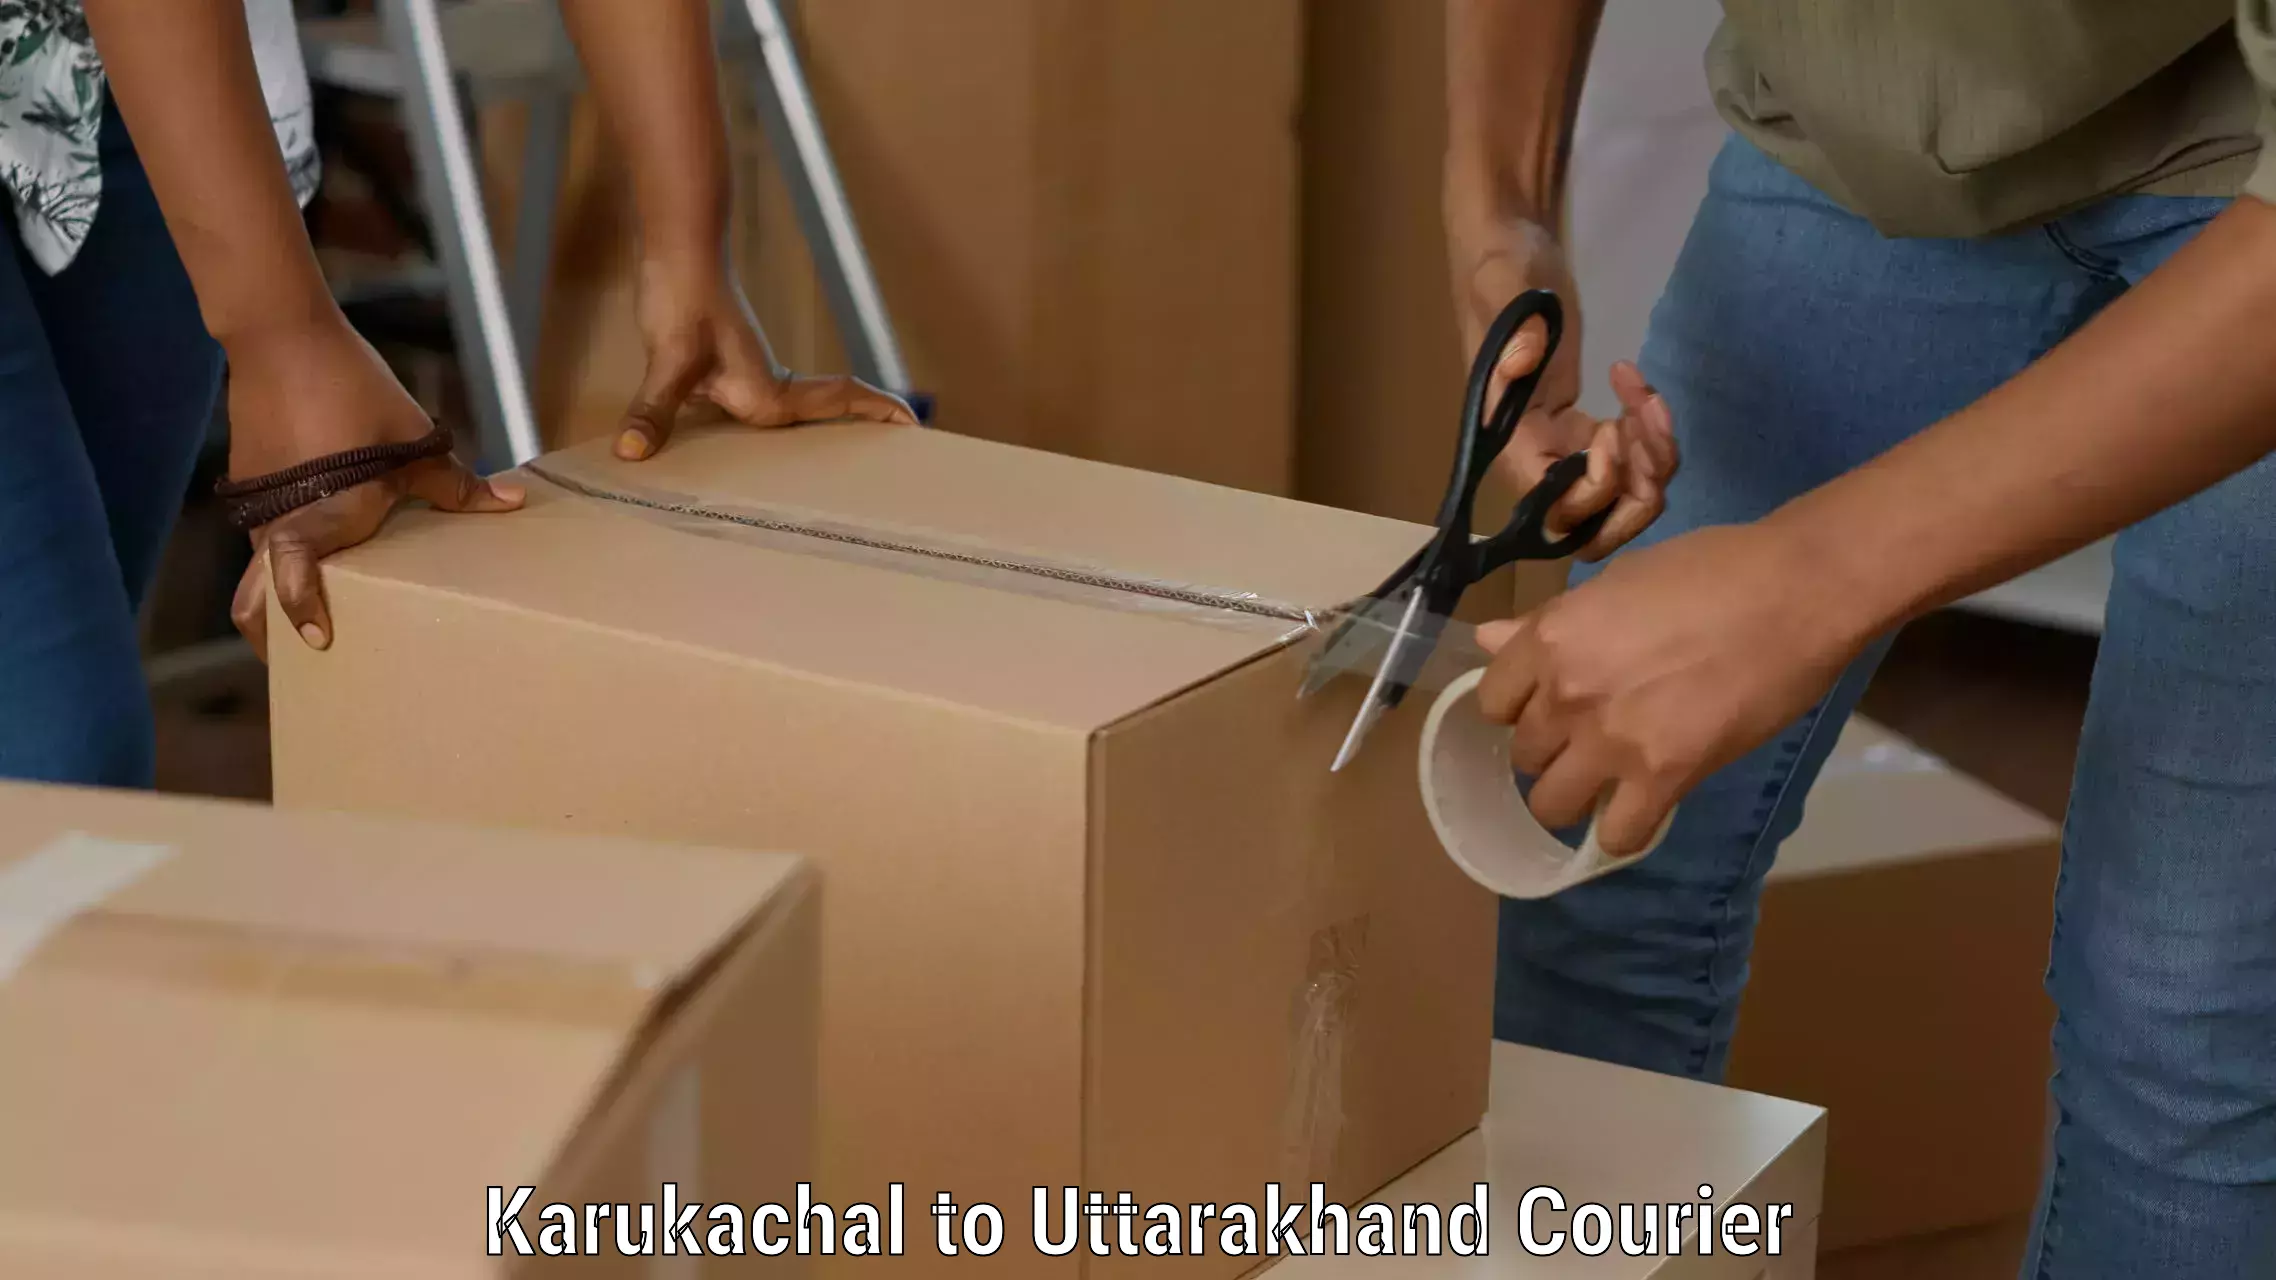 Global logistics network Karukachal to Uttarakhand